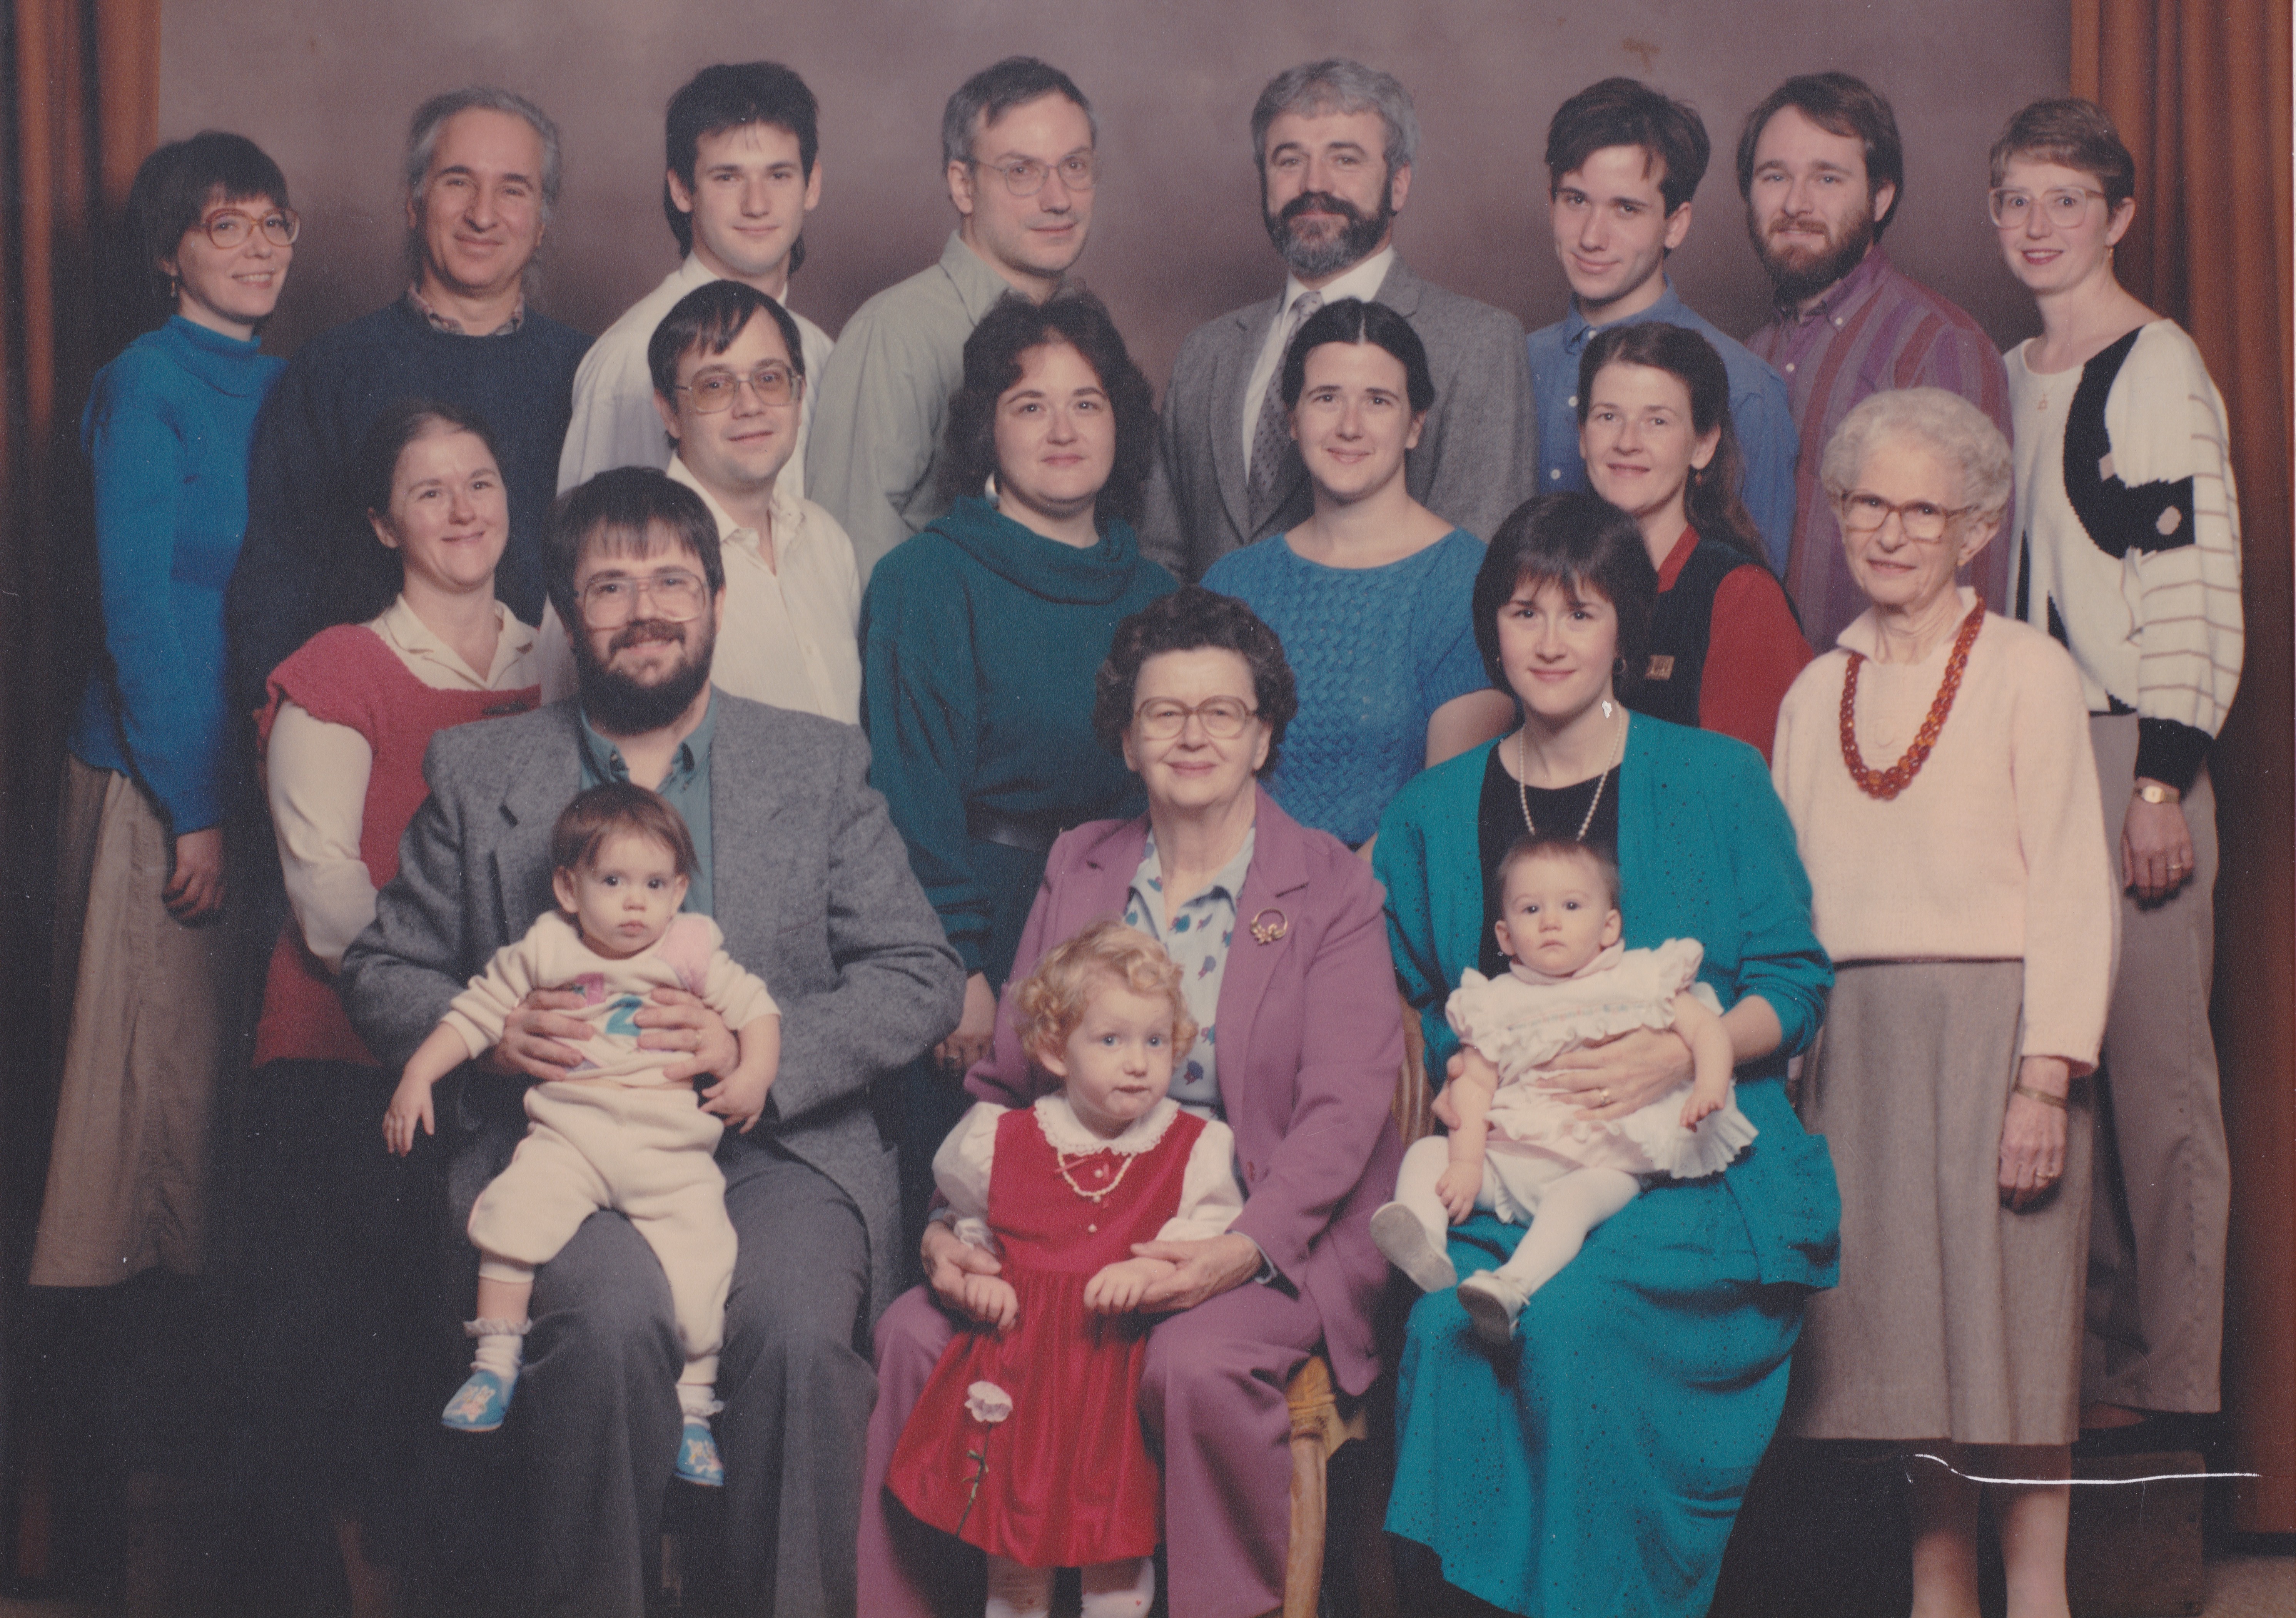 Levin family portrait, December 1987